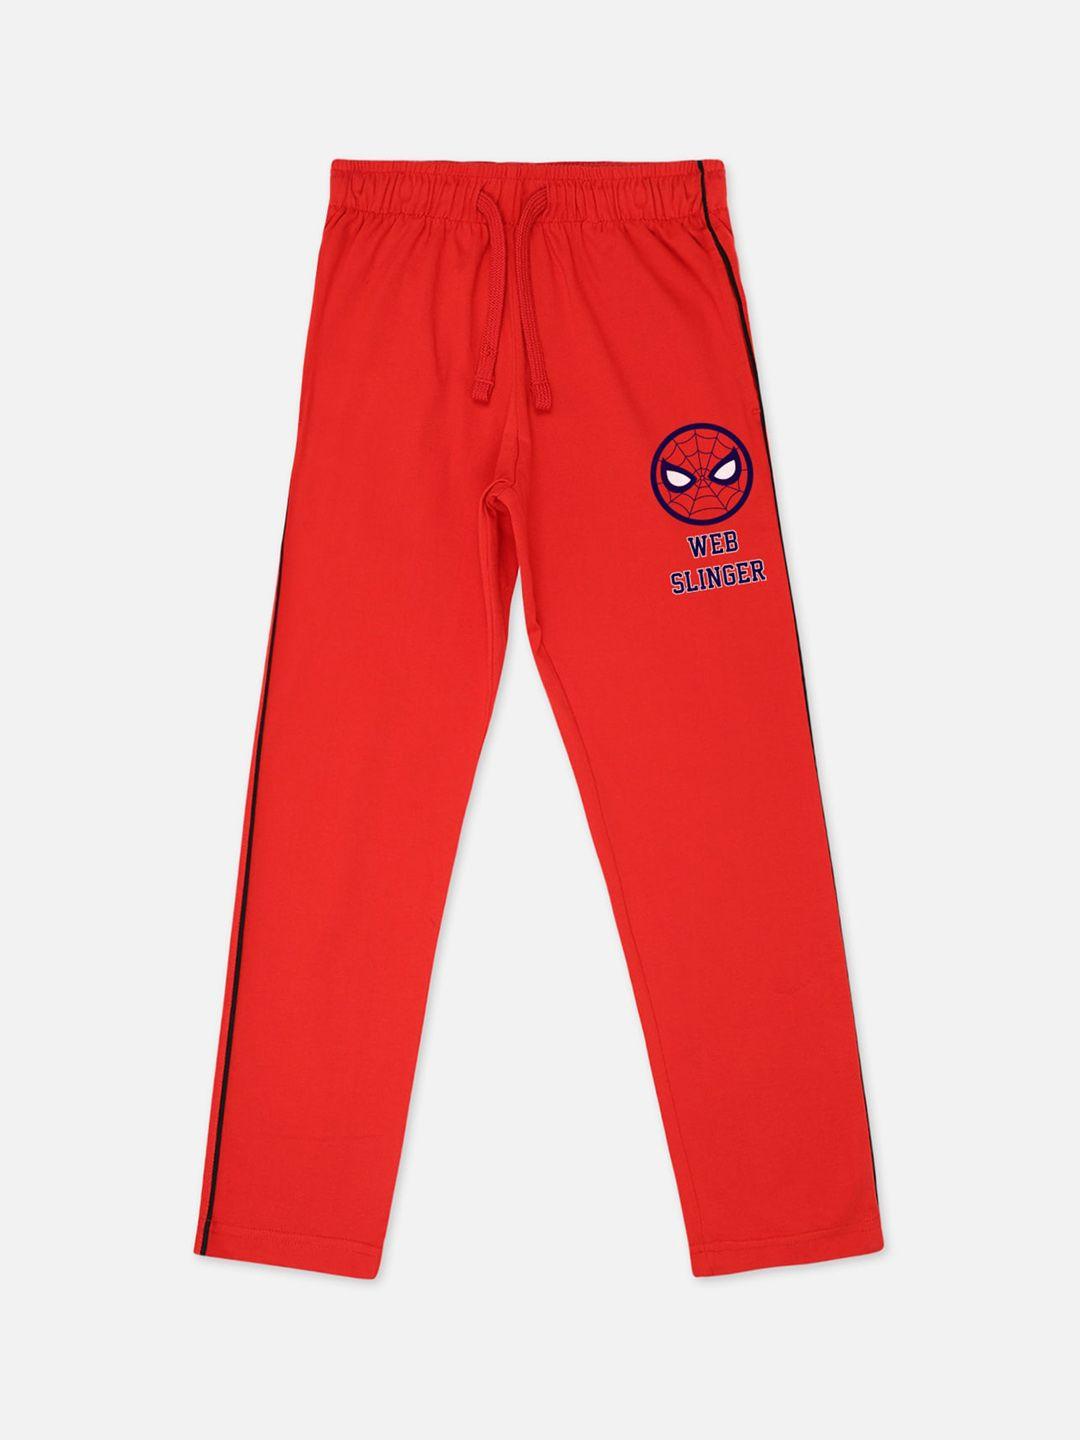 spiderman printed red pyjama for boys